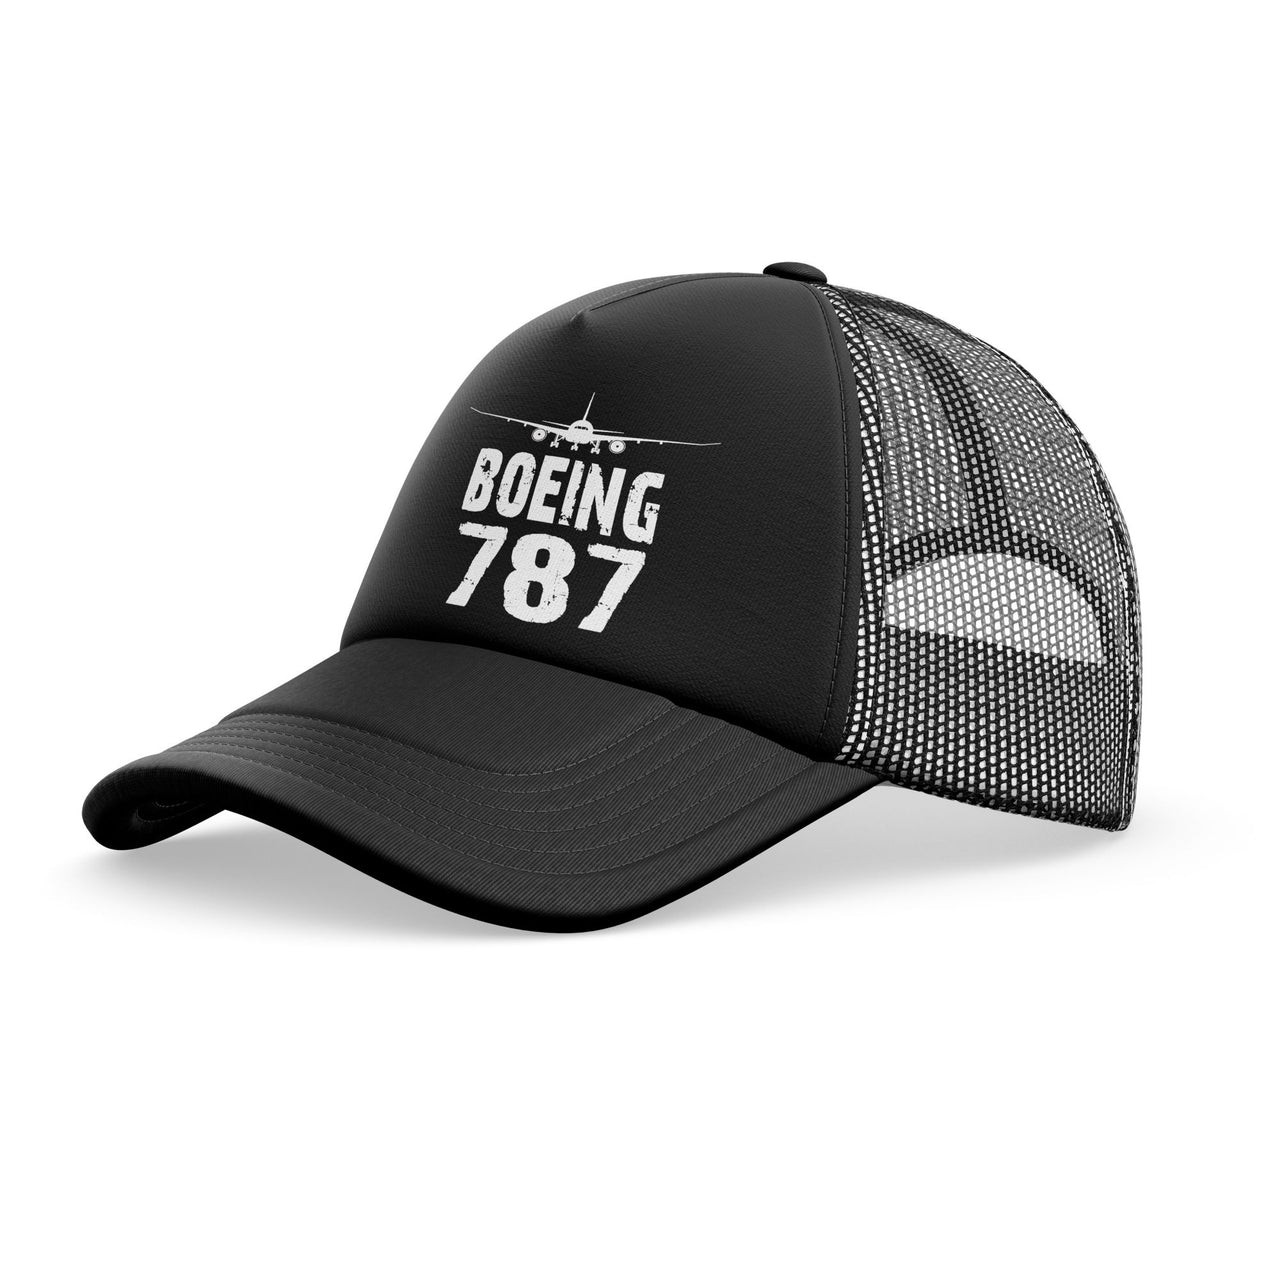 Boeing 787 & Plane Designed Trucker Caps & Hats